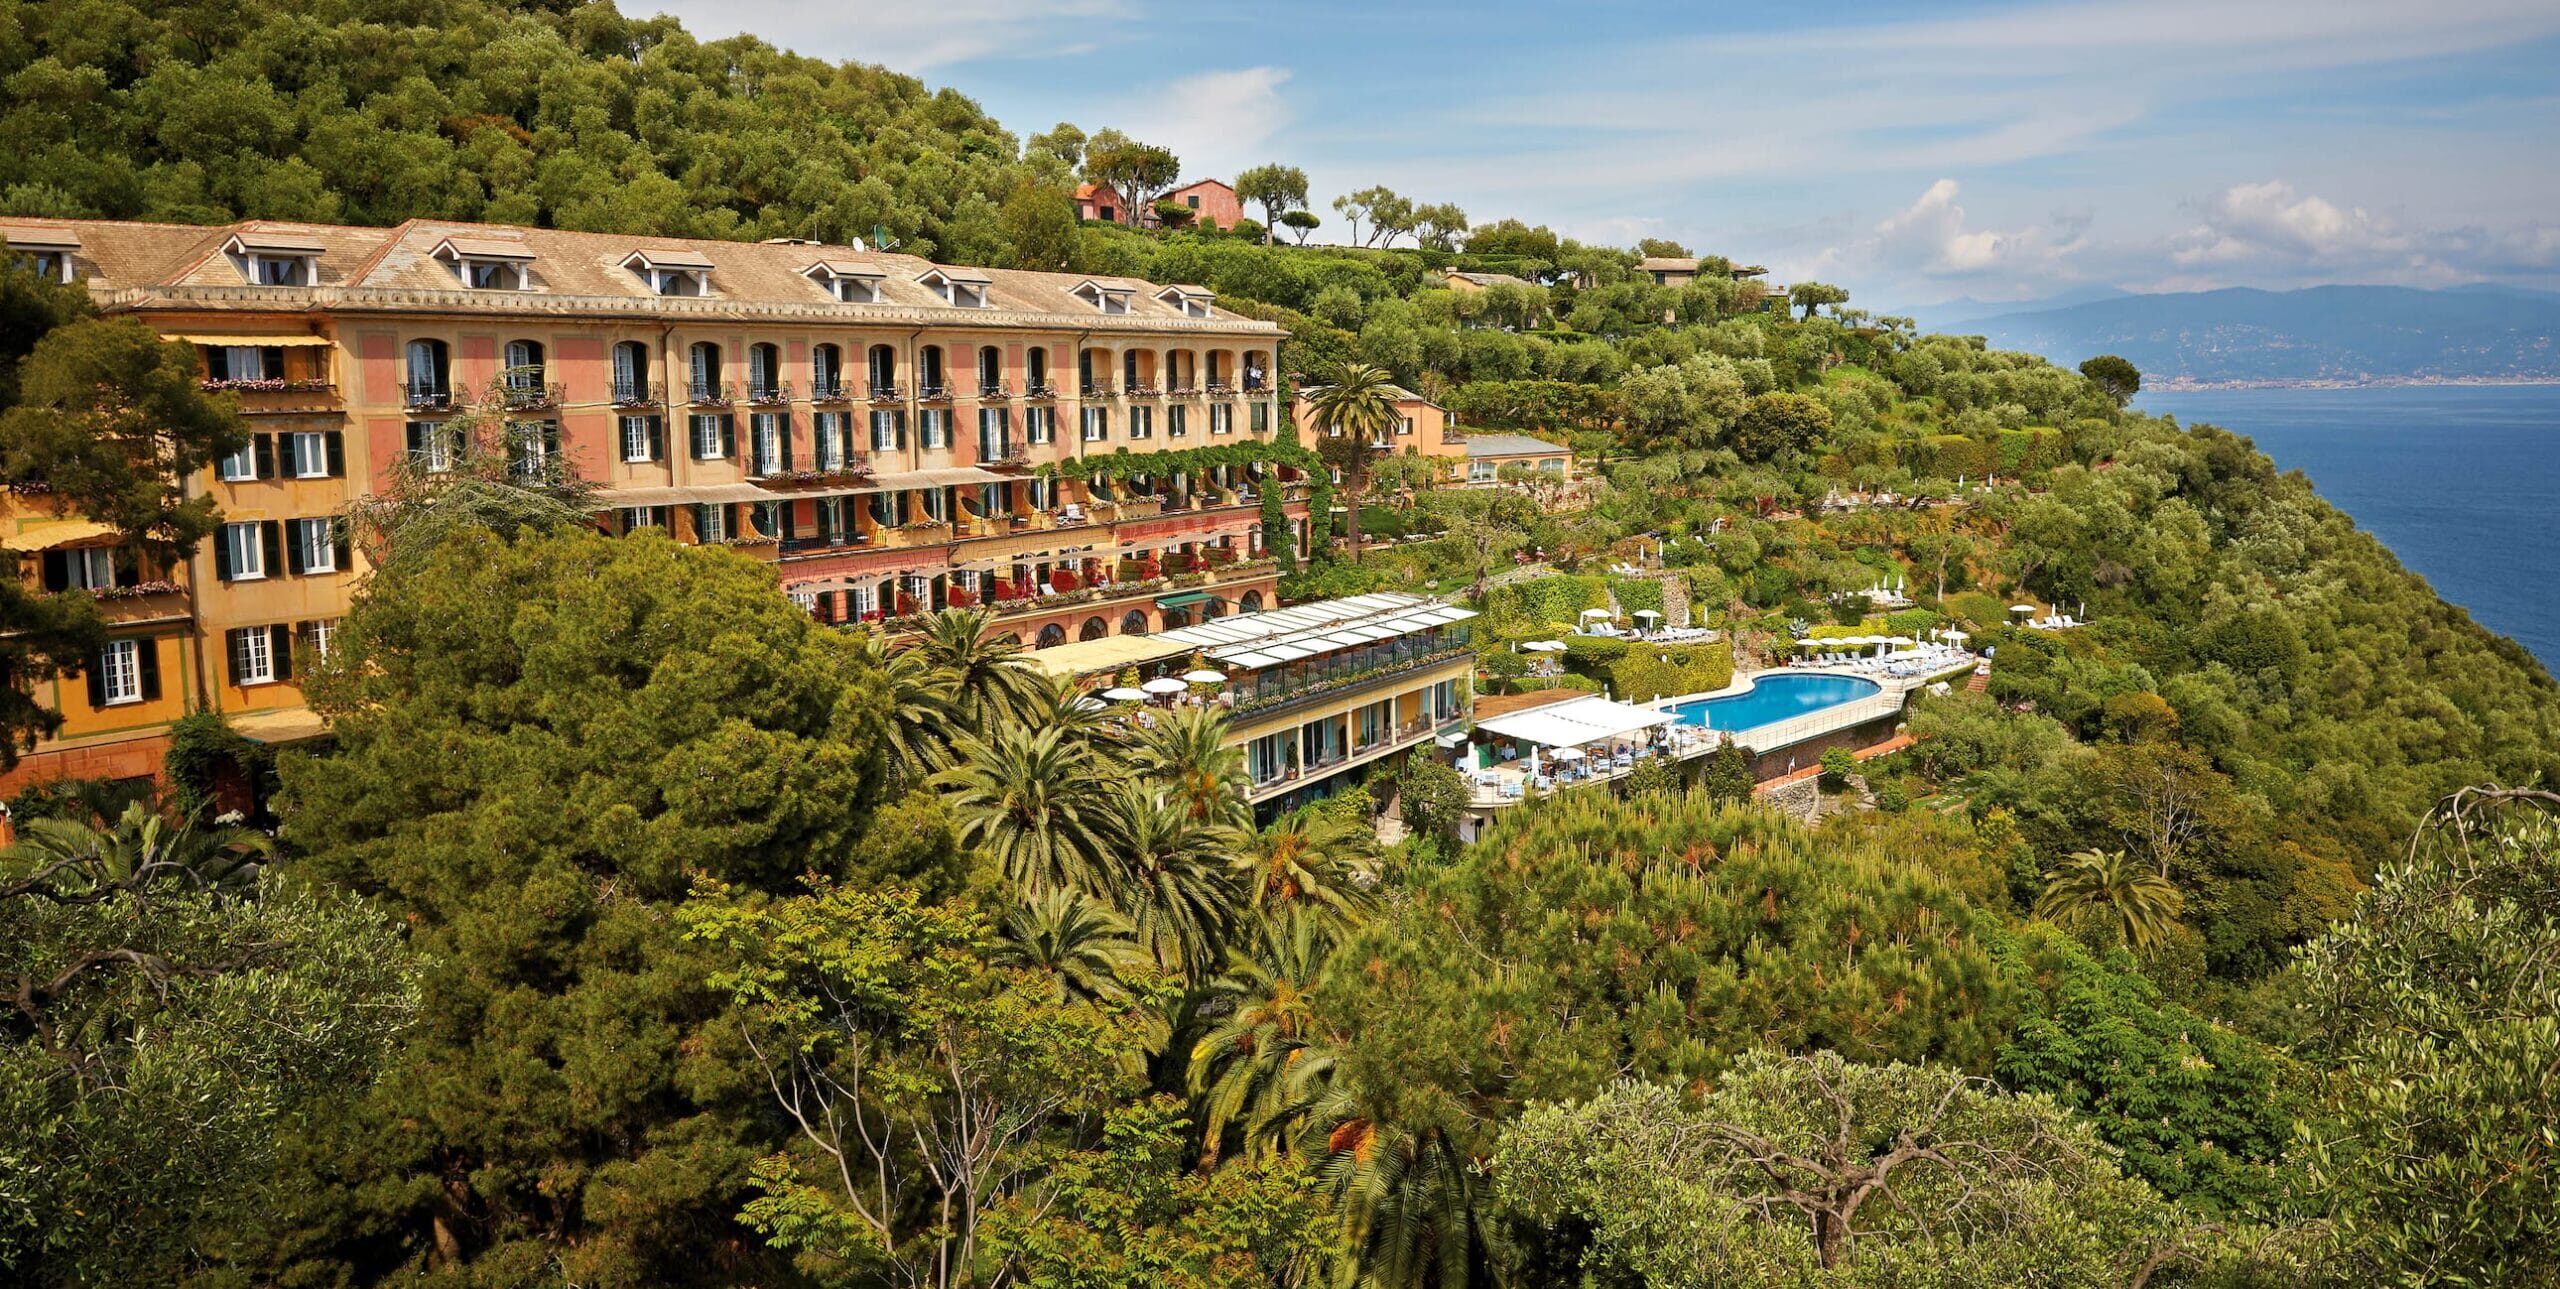 Luxury resort for weddings in Portofino